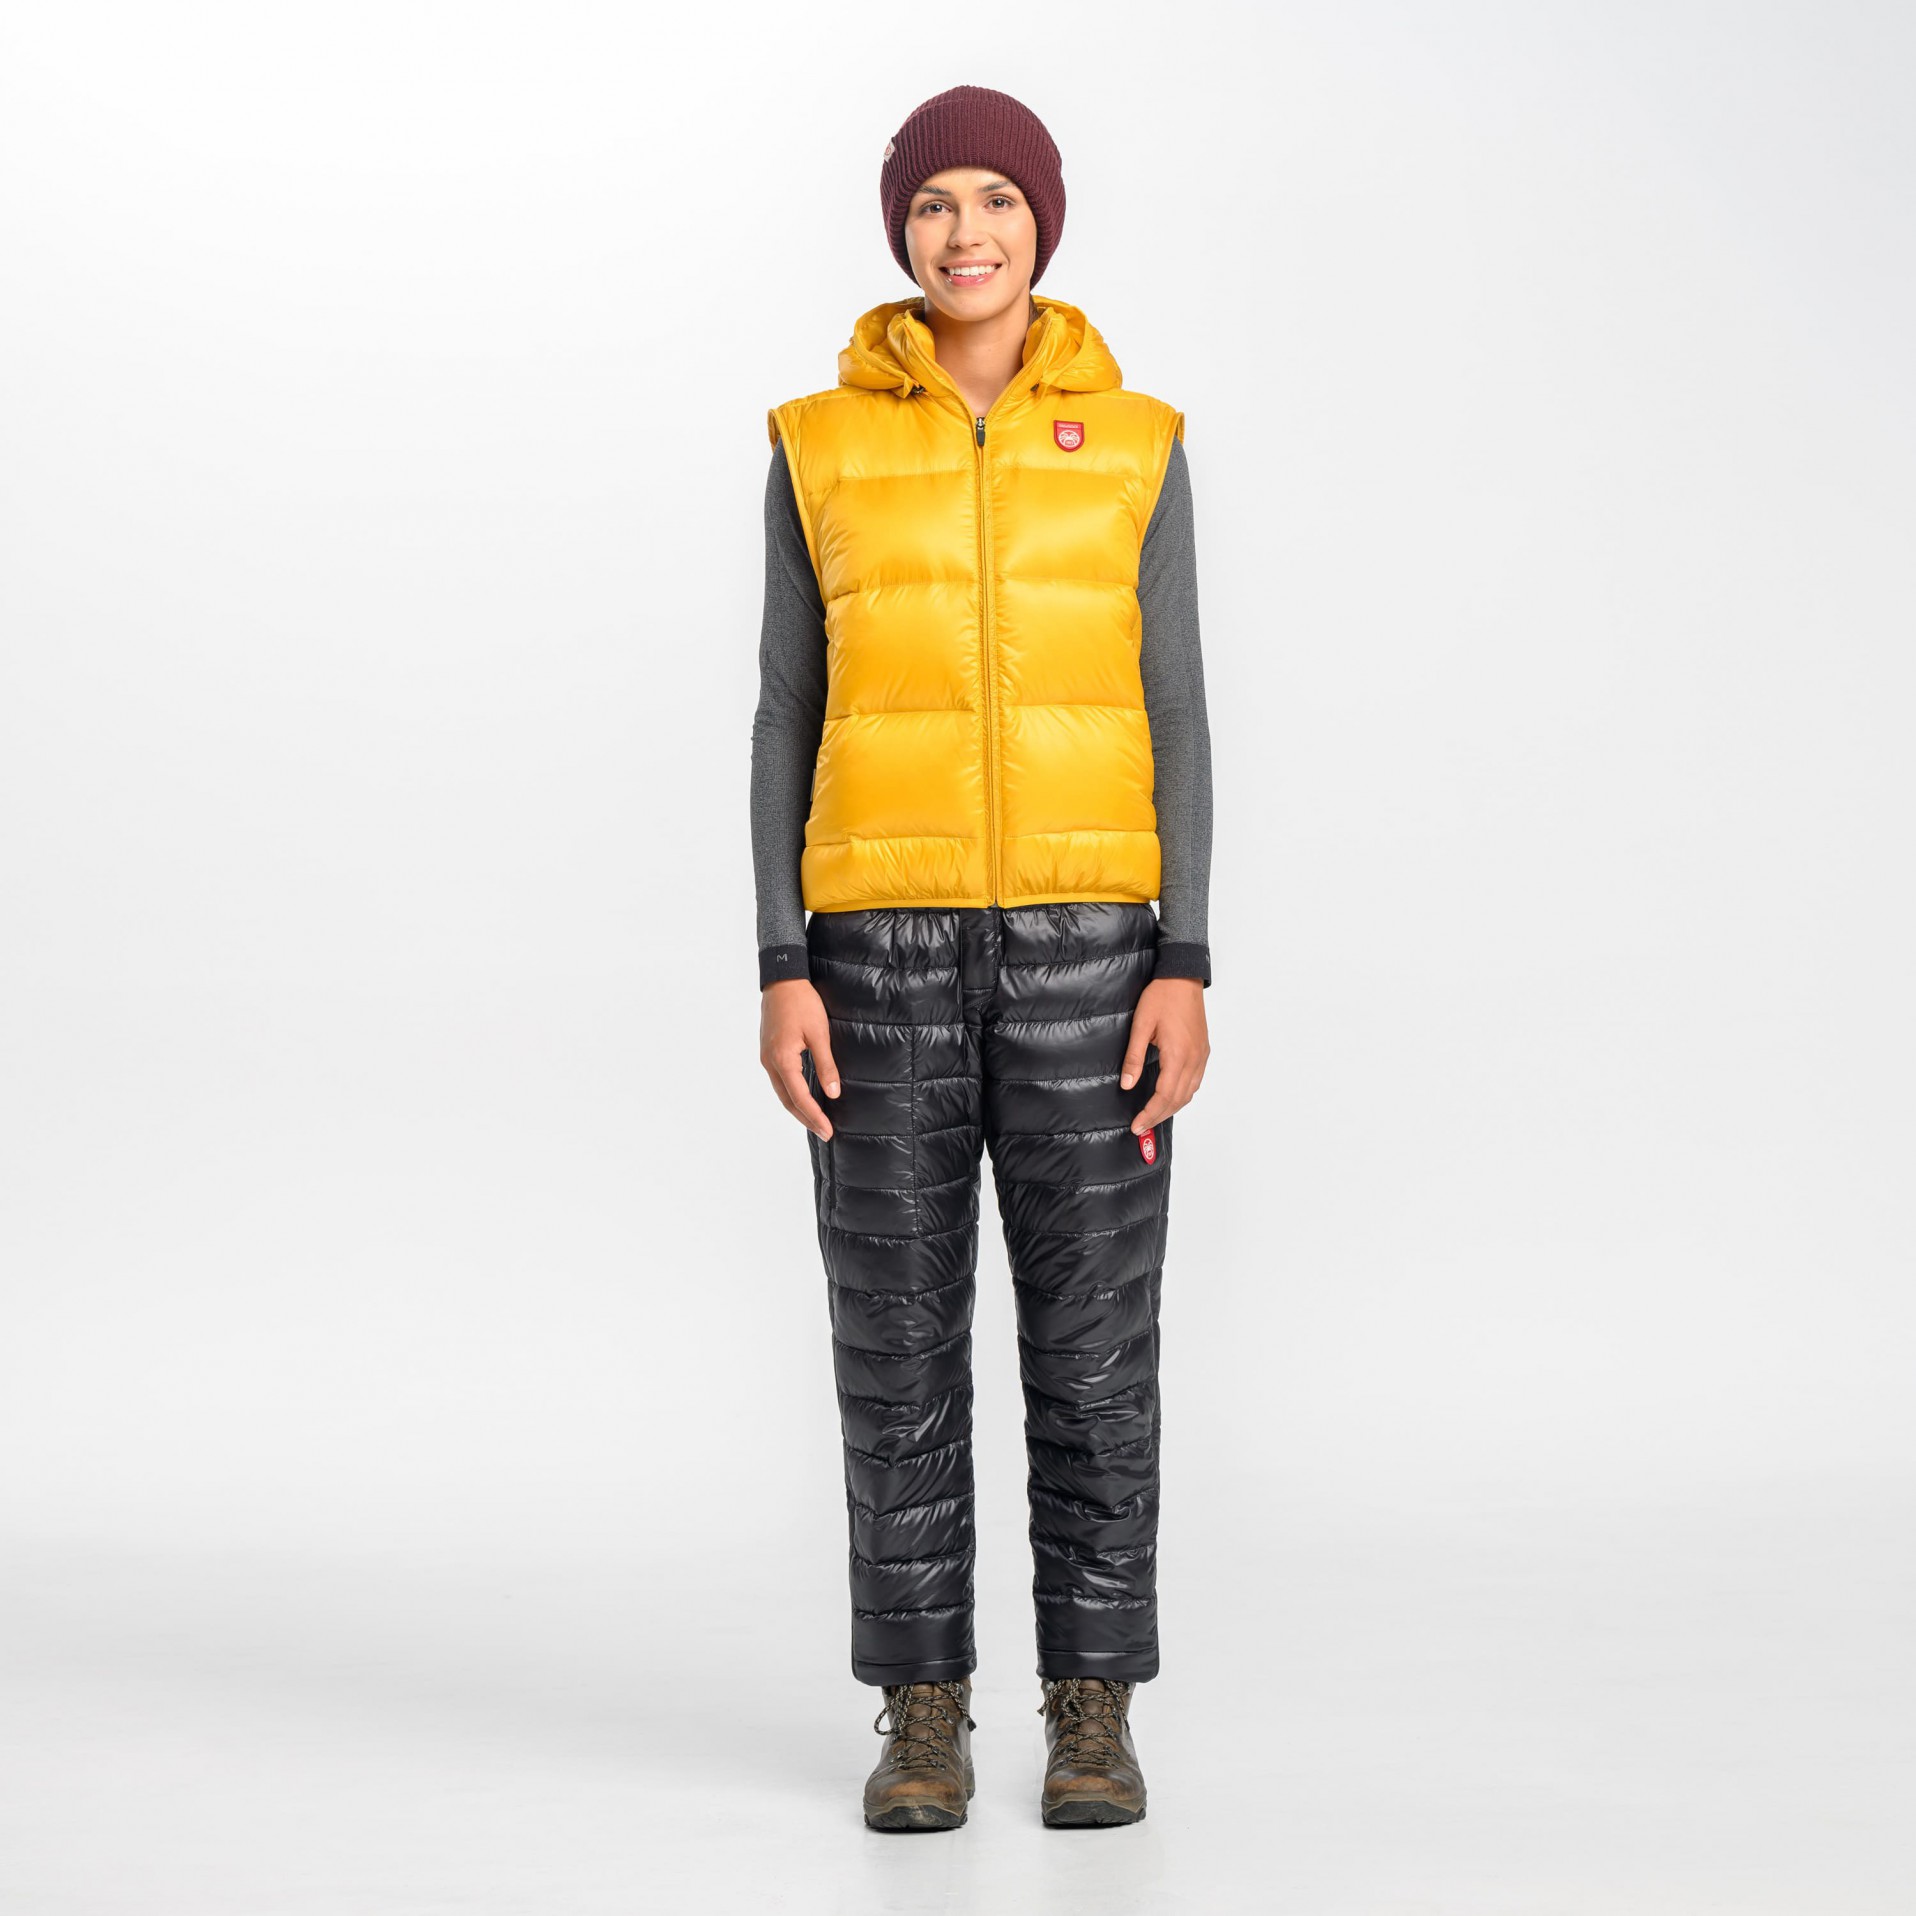 ESKIMO Winter Mountain Jacket